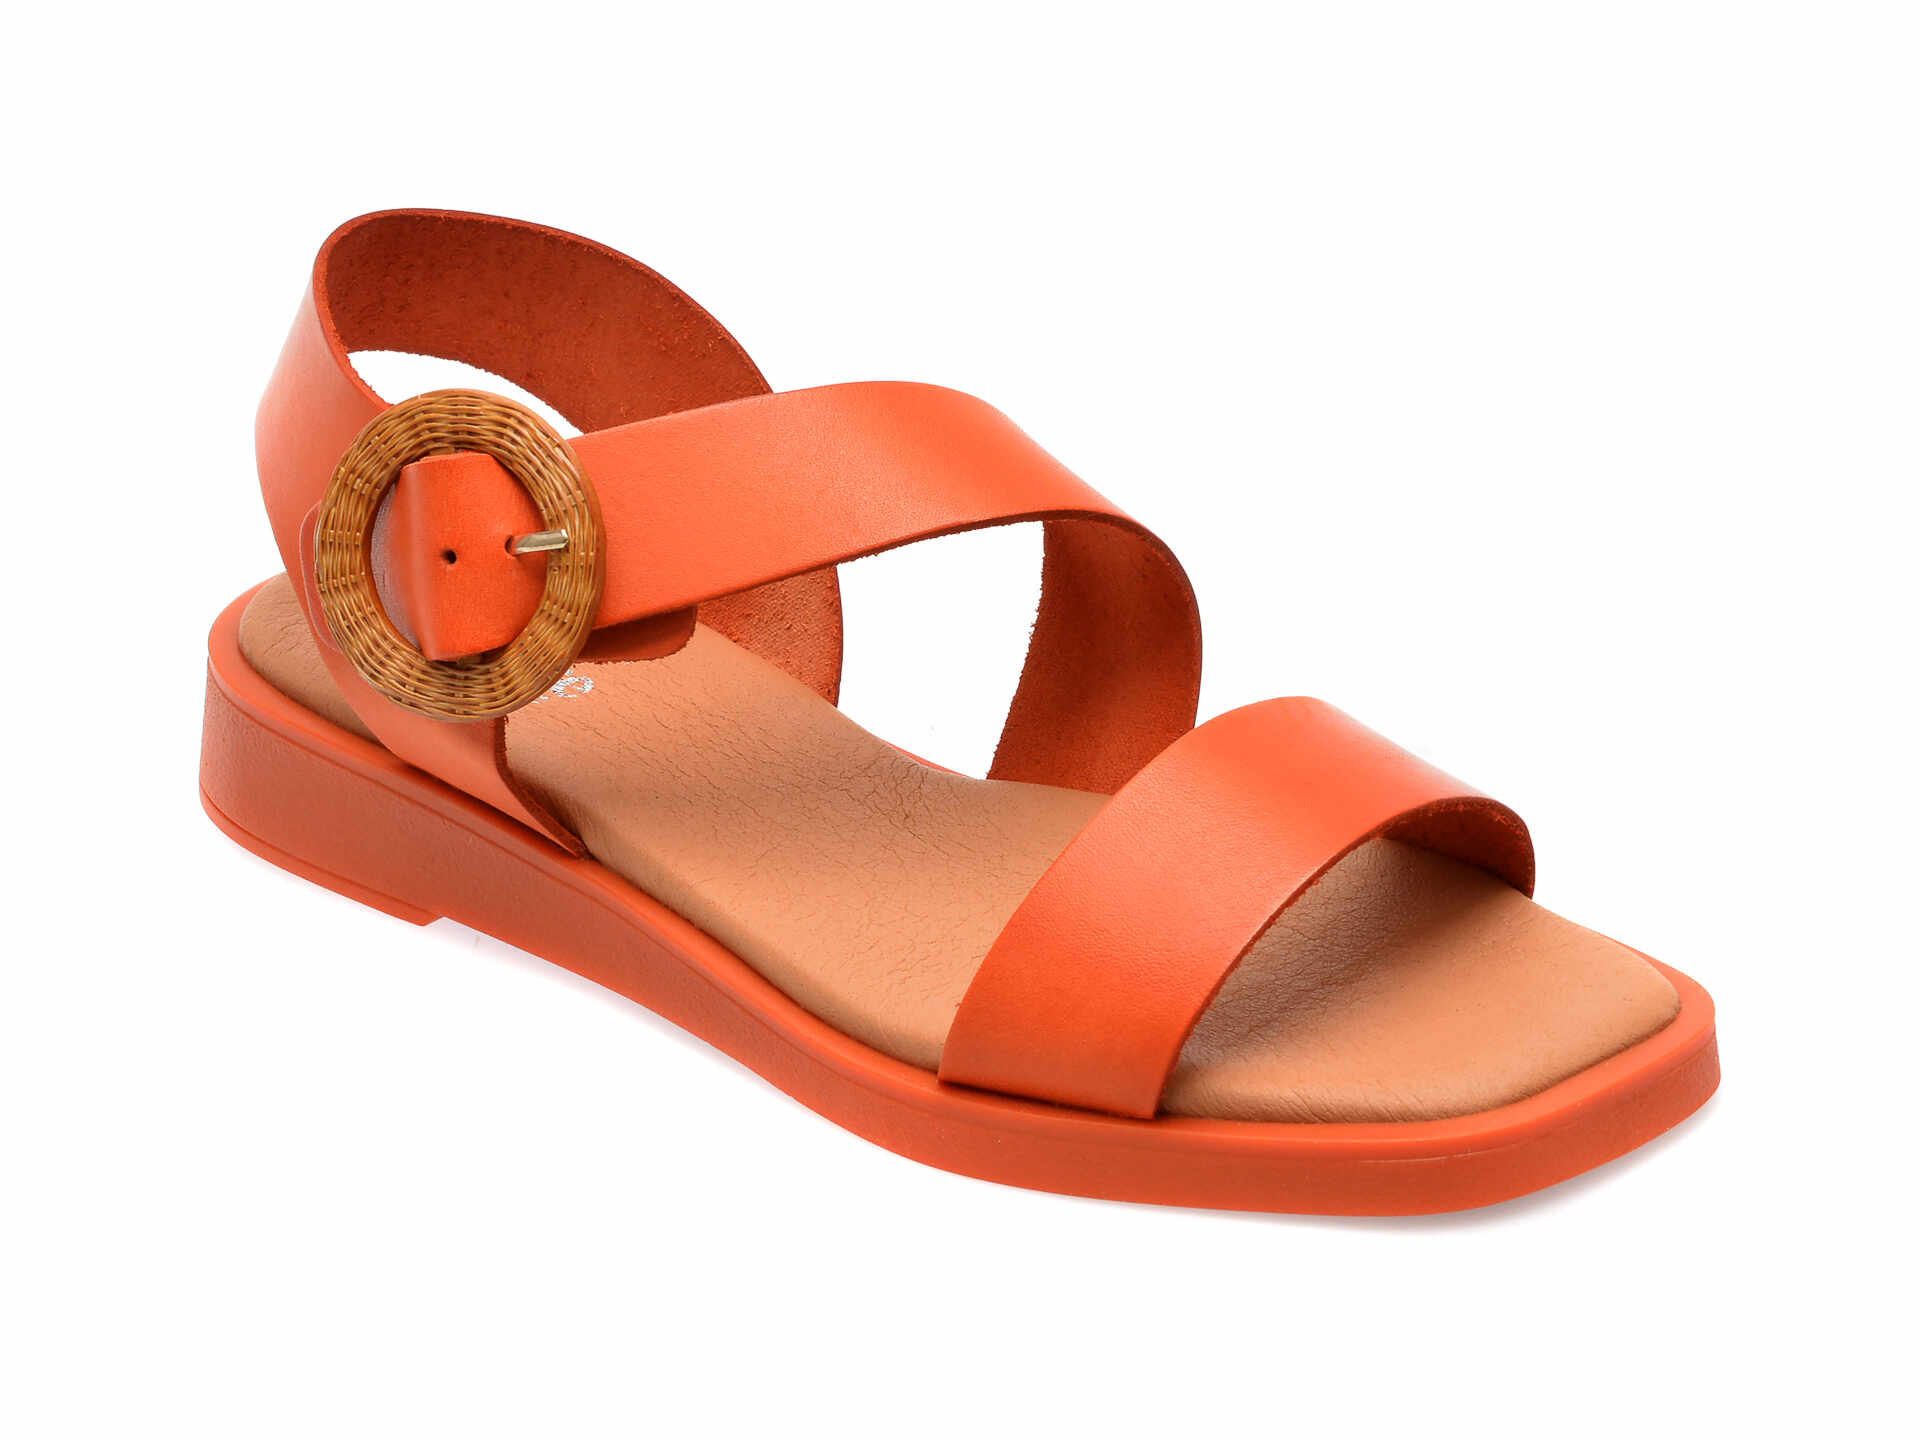 Sandale IMAGE portocalii, ANGELIN, din piele naturala